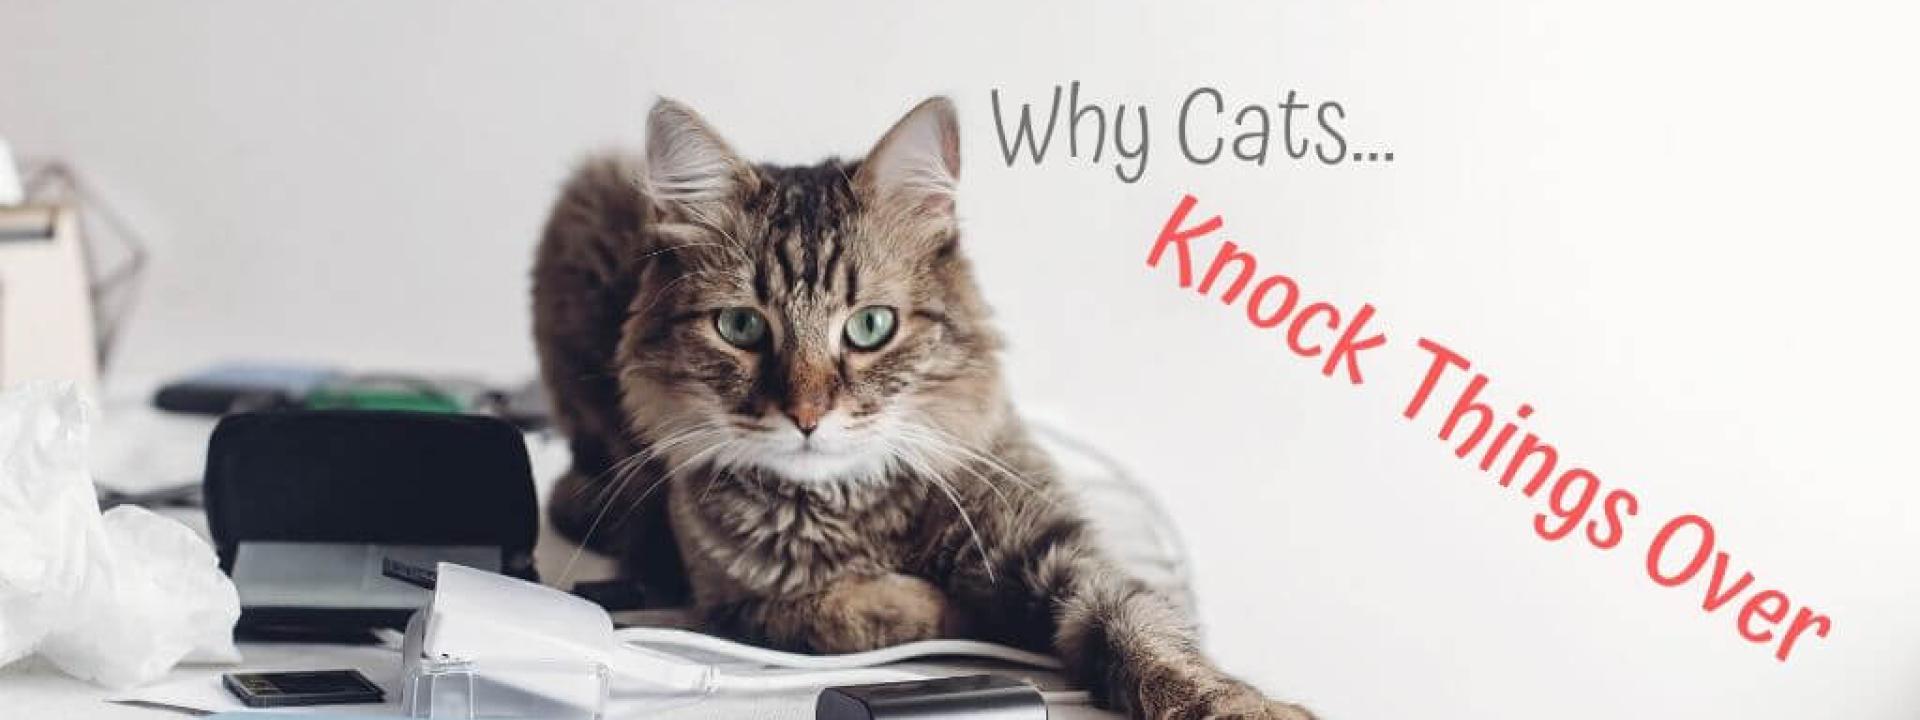 cats-knock-things-over-blog-header.jpg